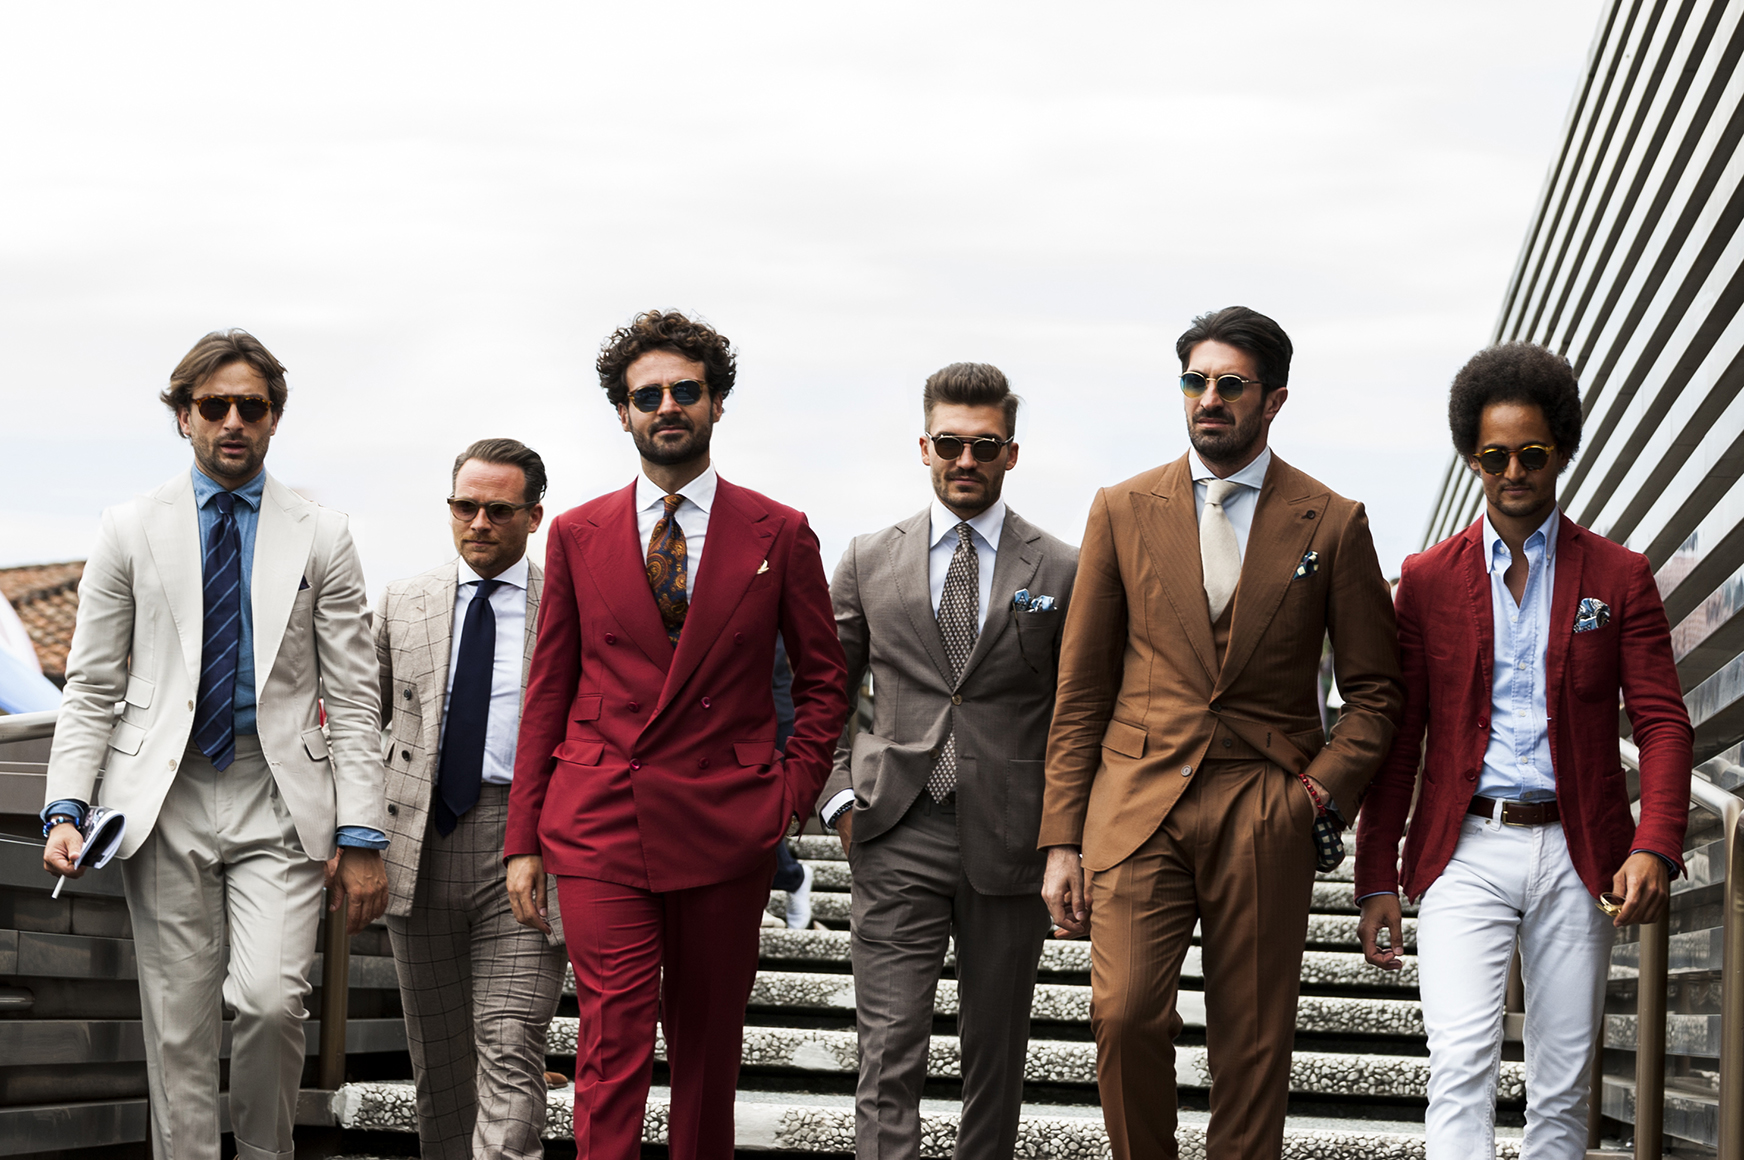 pitti uomo 2018, 2018 men's clothes, blazers, jackets, checks, tartan, pinstripe suits